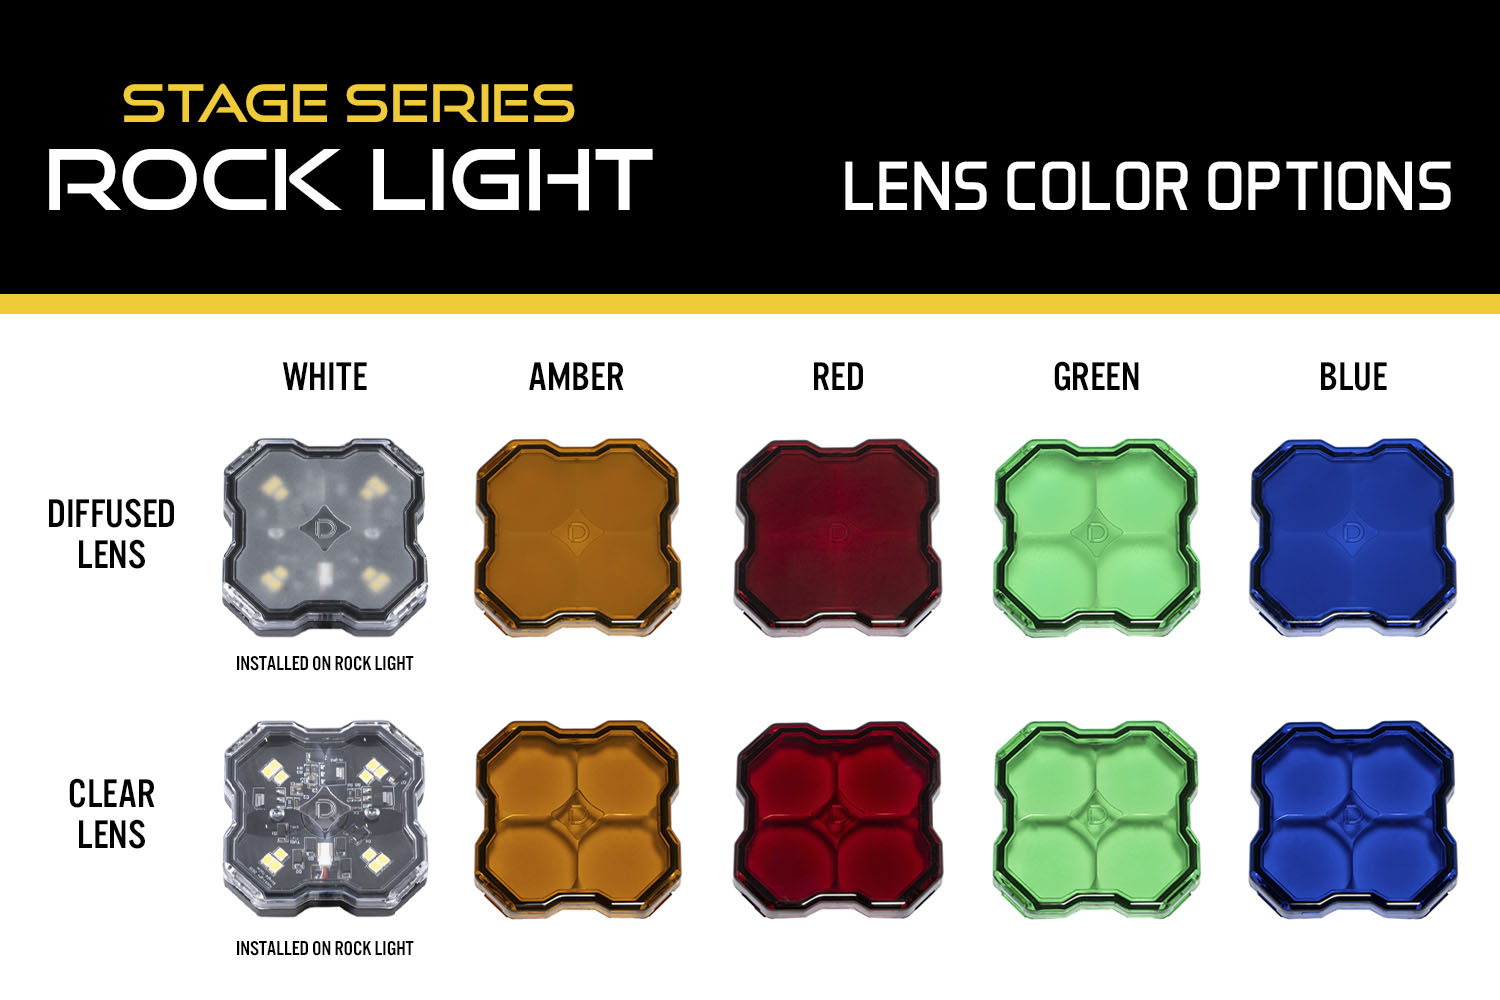 Lens color options for Stage Series Rock Lights for trucks